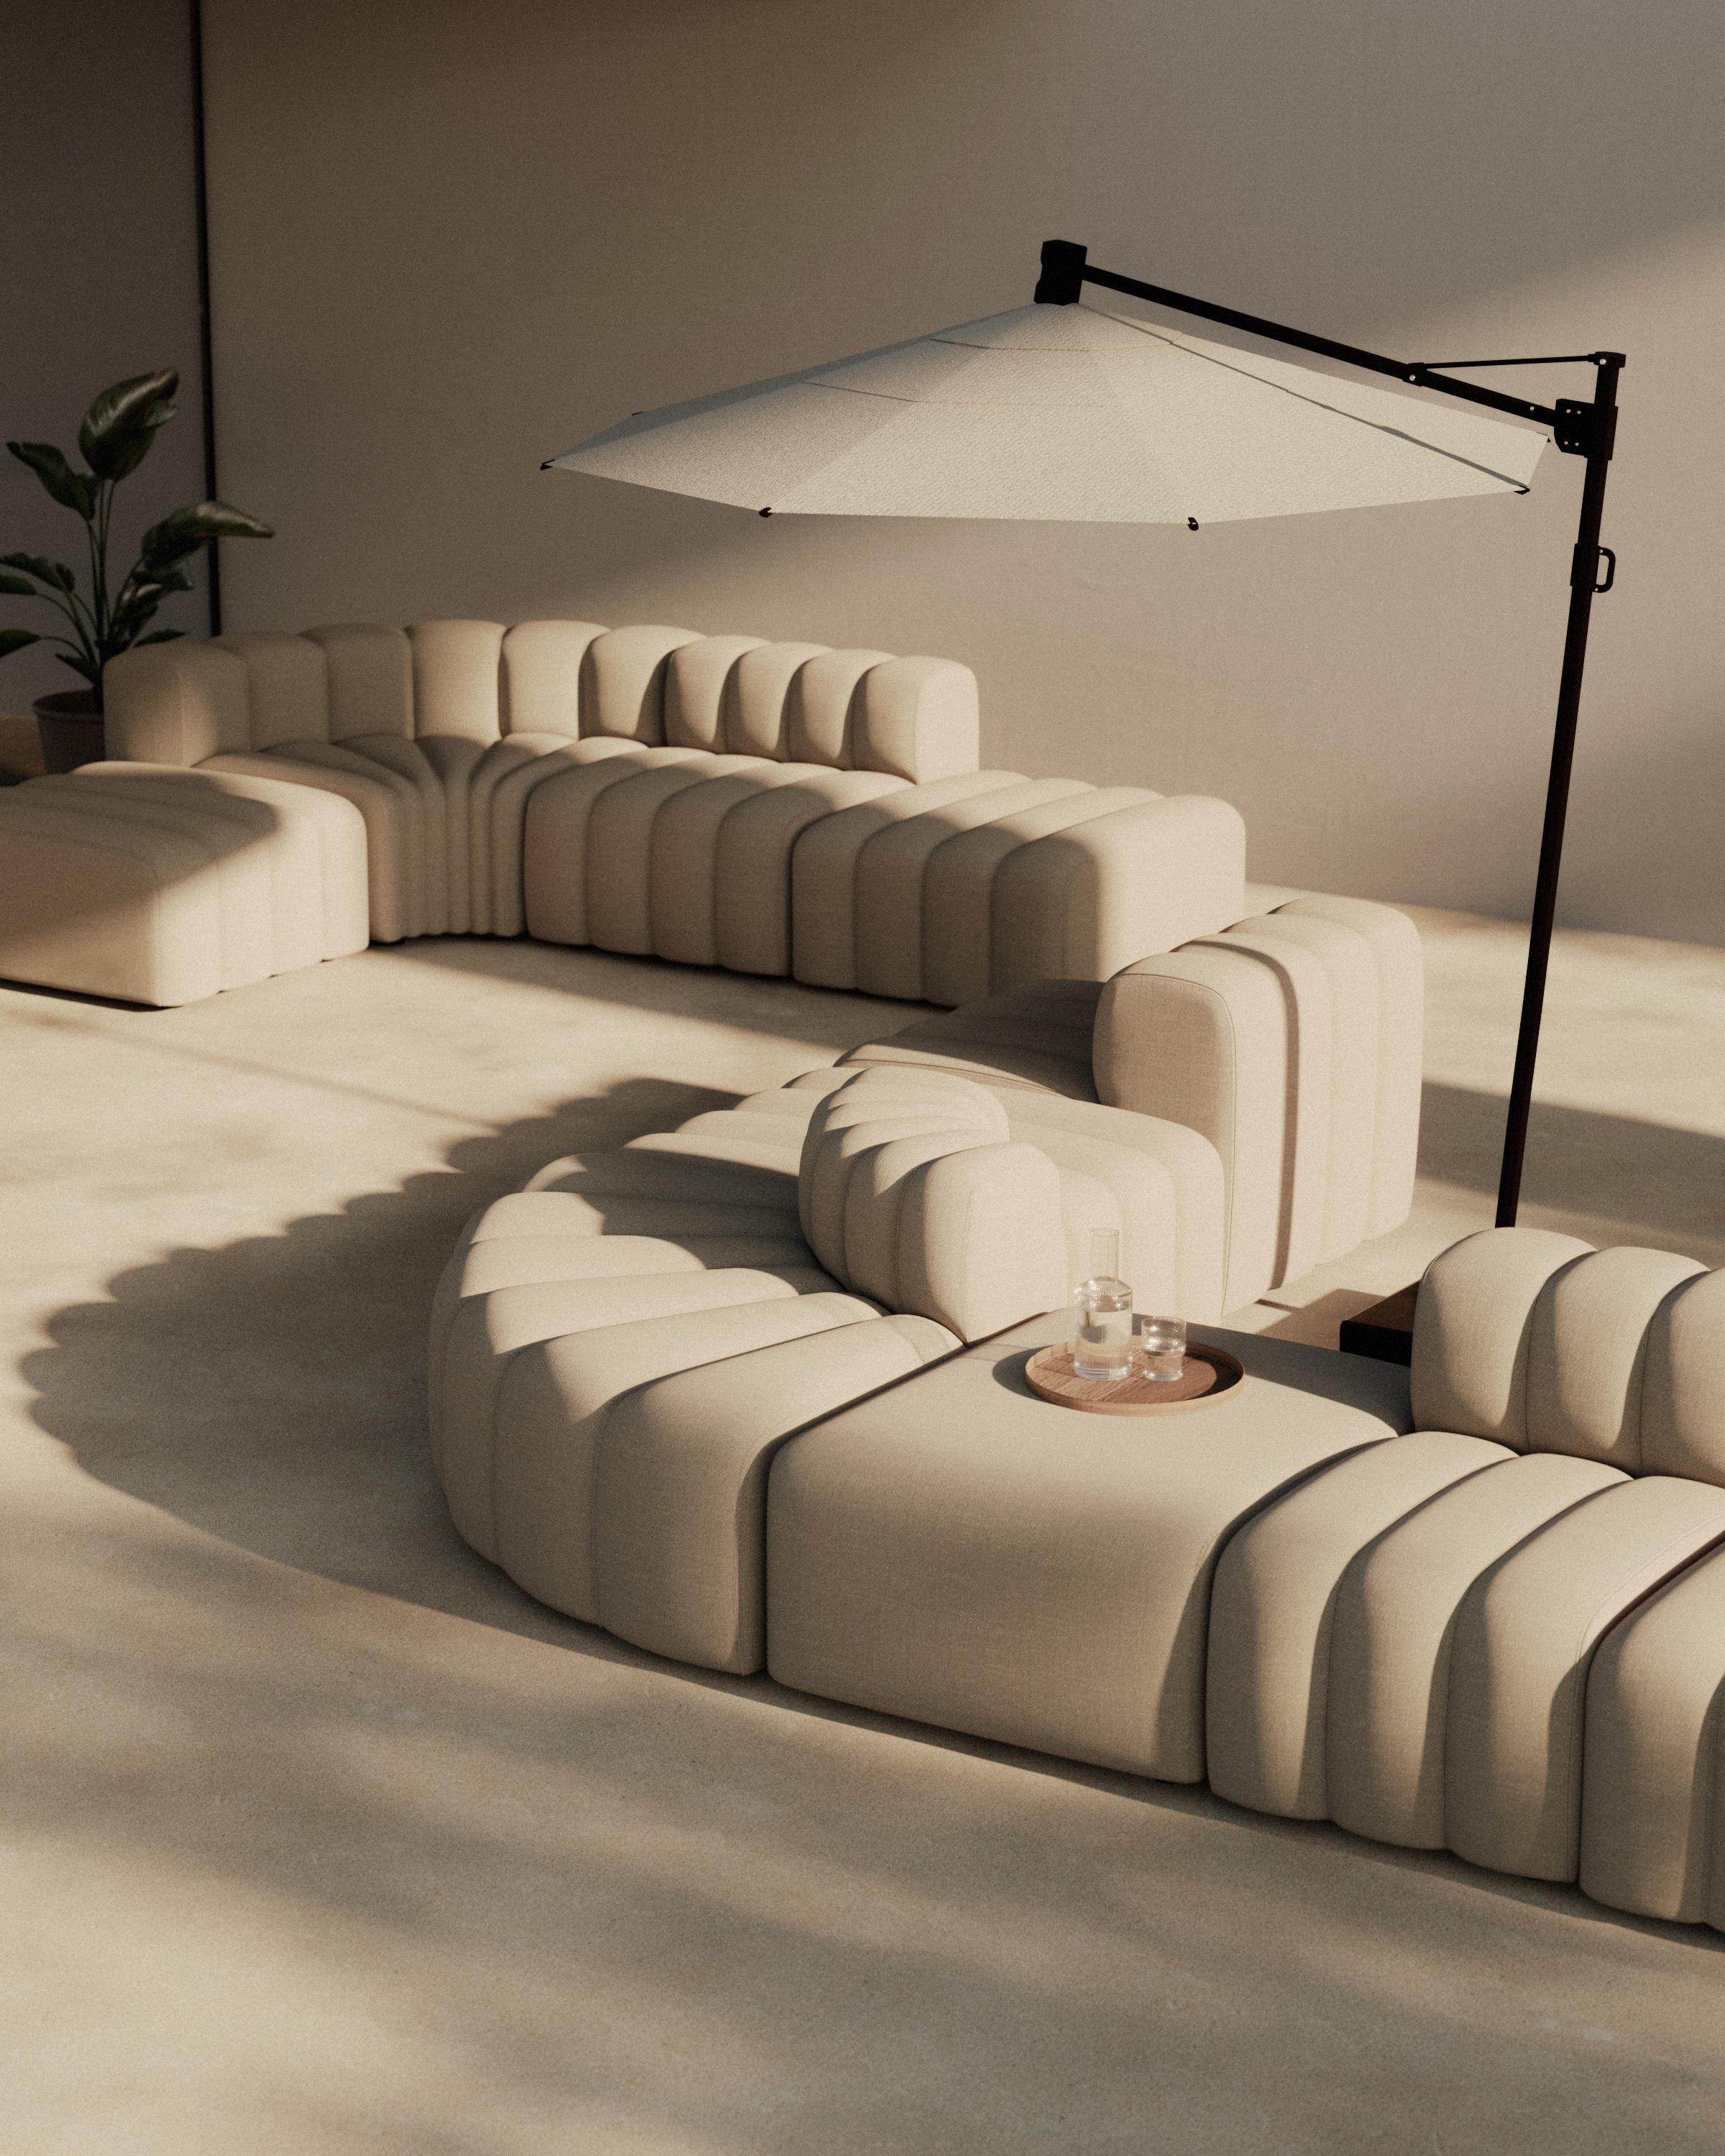 Danish Studio Corner Modular Outdoor Sofa by NORR11